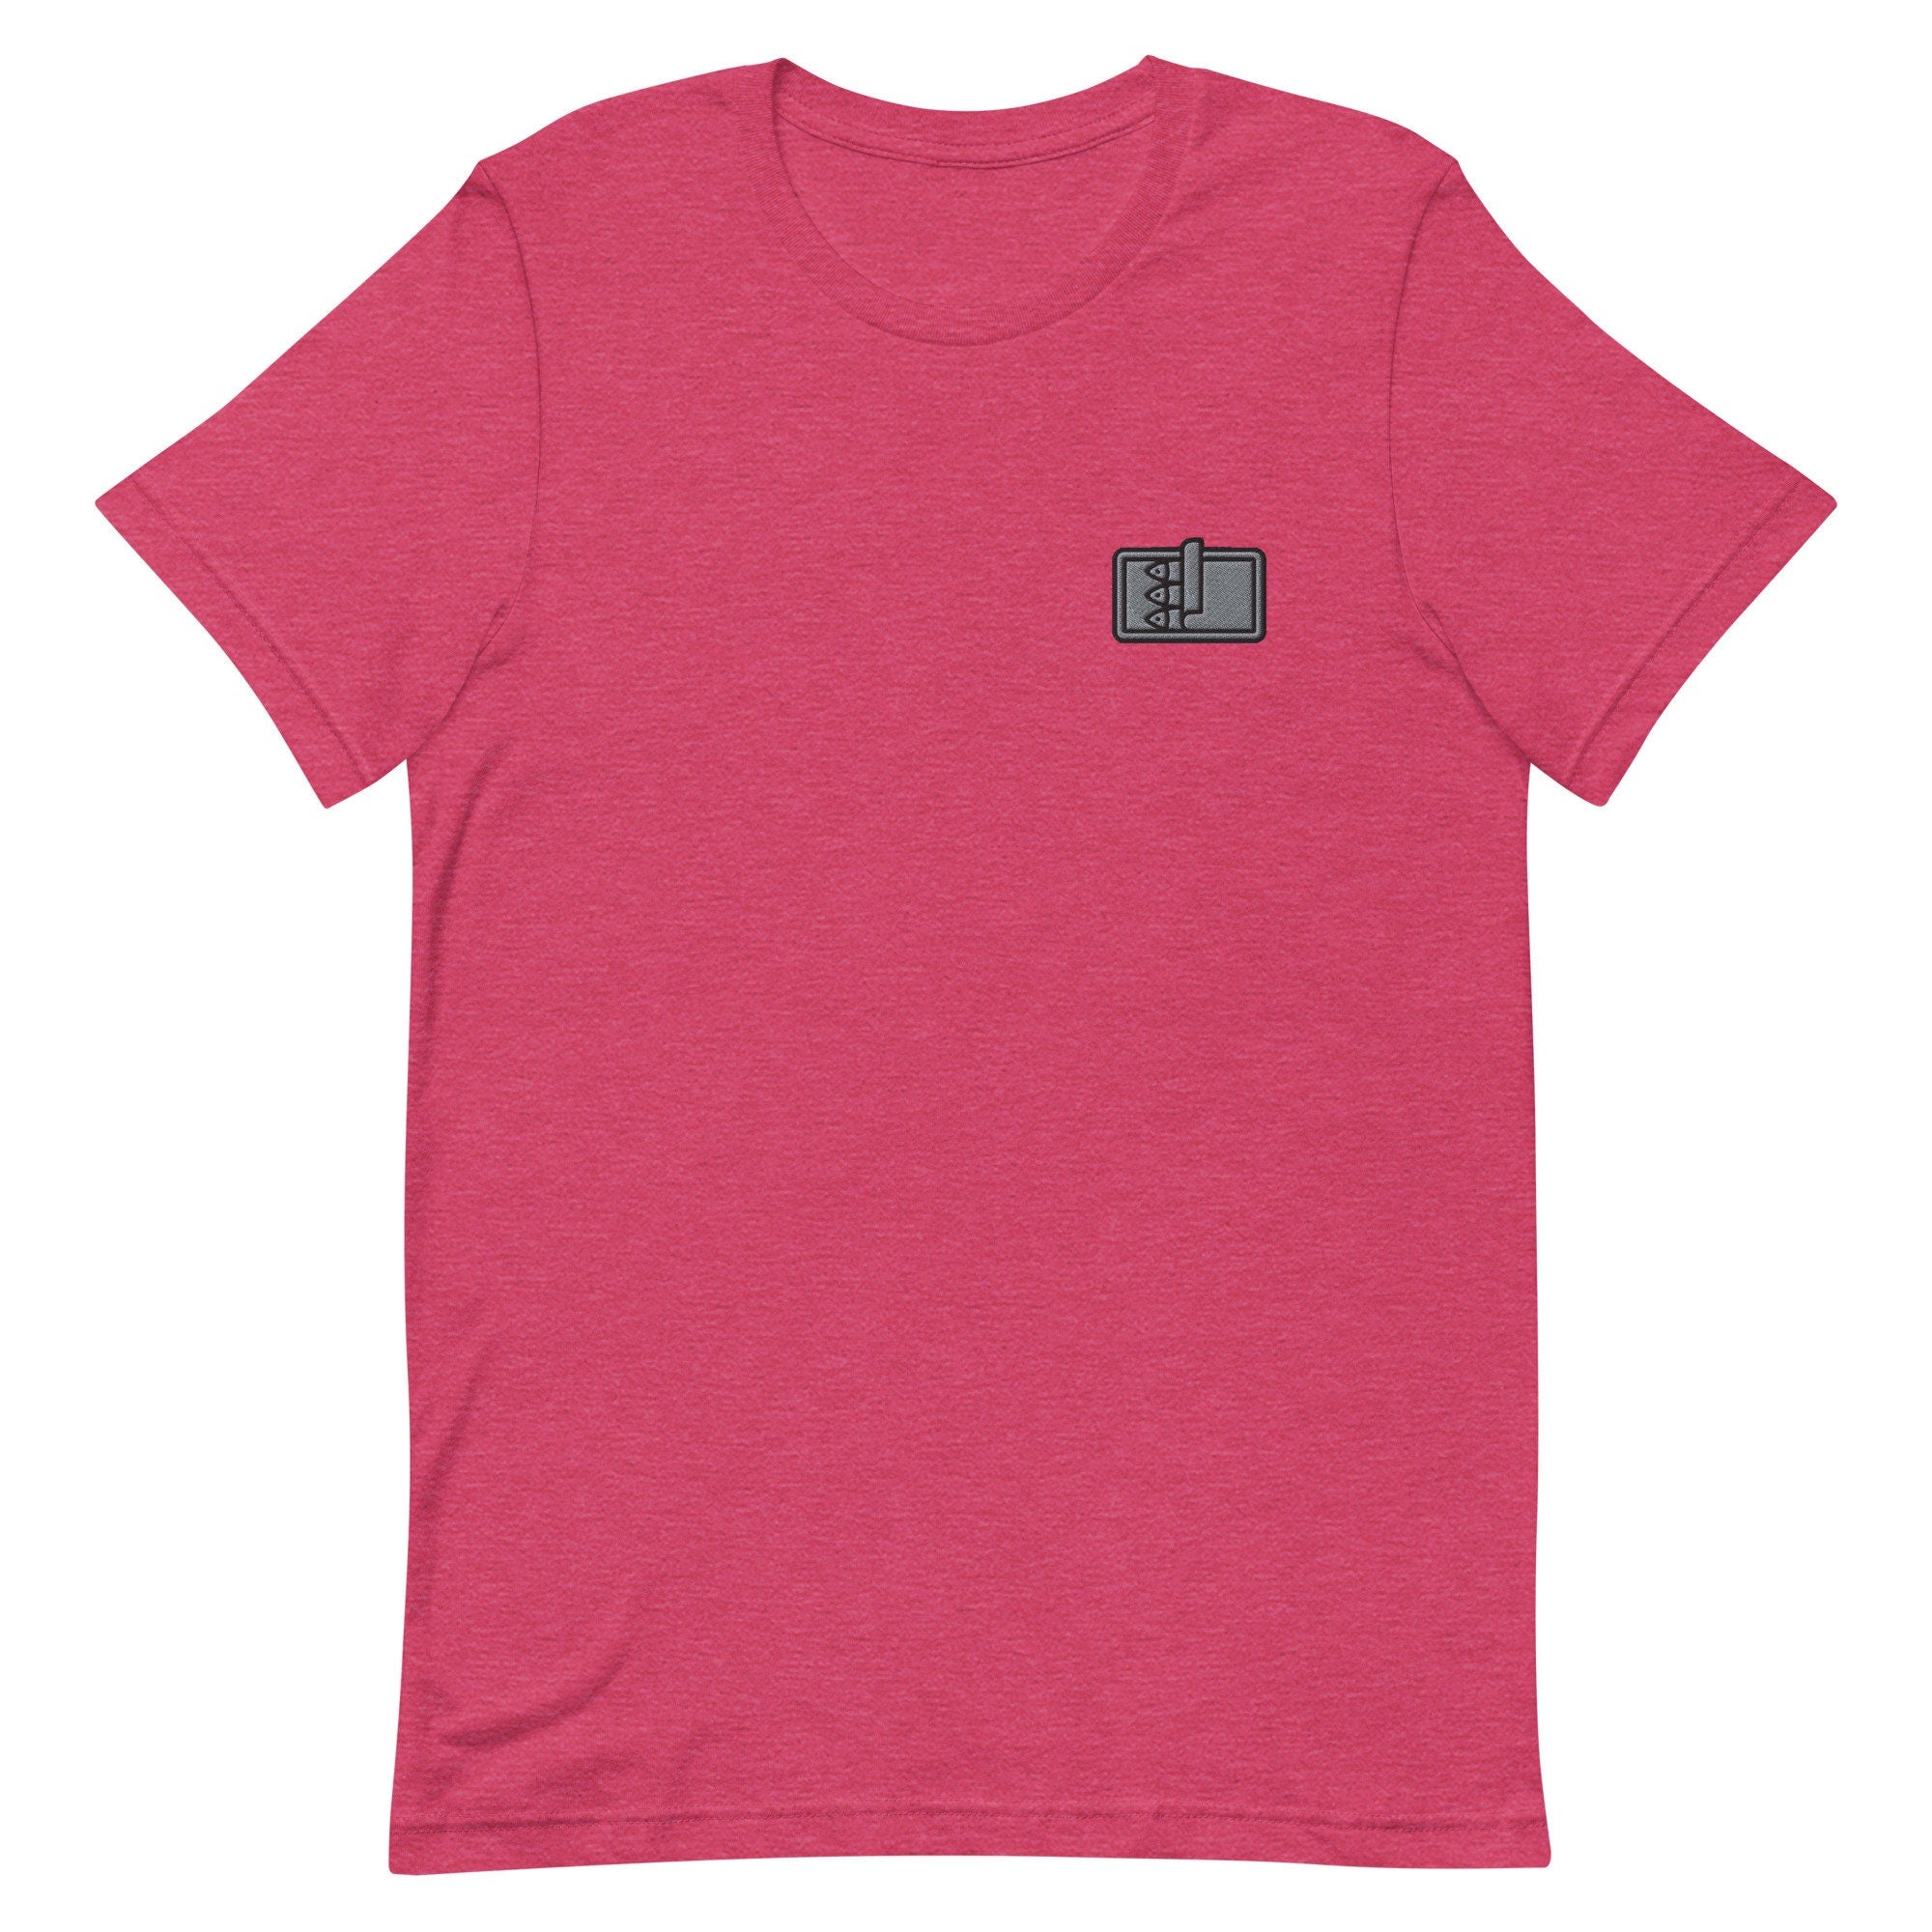 Sardine Can Premium Men's T-Shirt, Embroidered Men's T-Shirt Gift for Boyfriend, Men's Short Sleeve Shirt - Multiple Colors